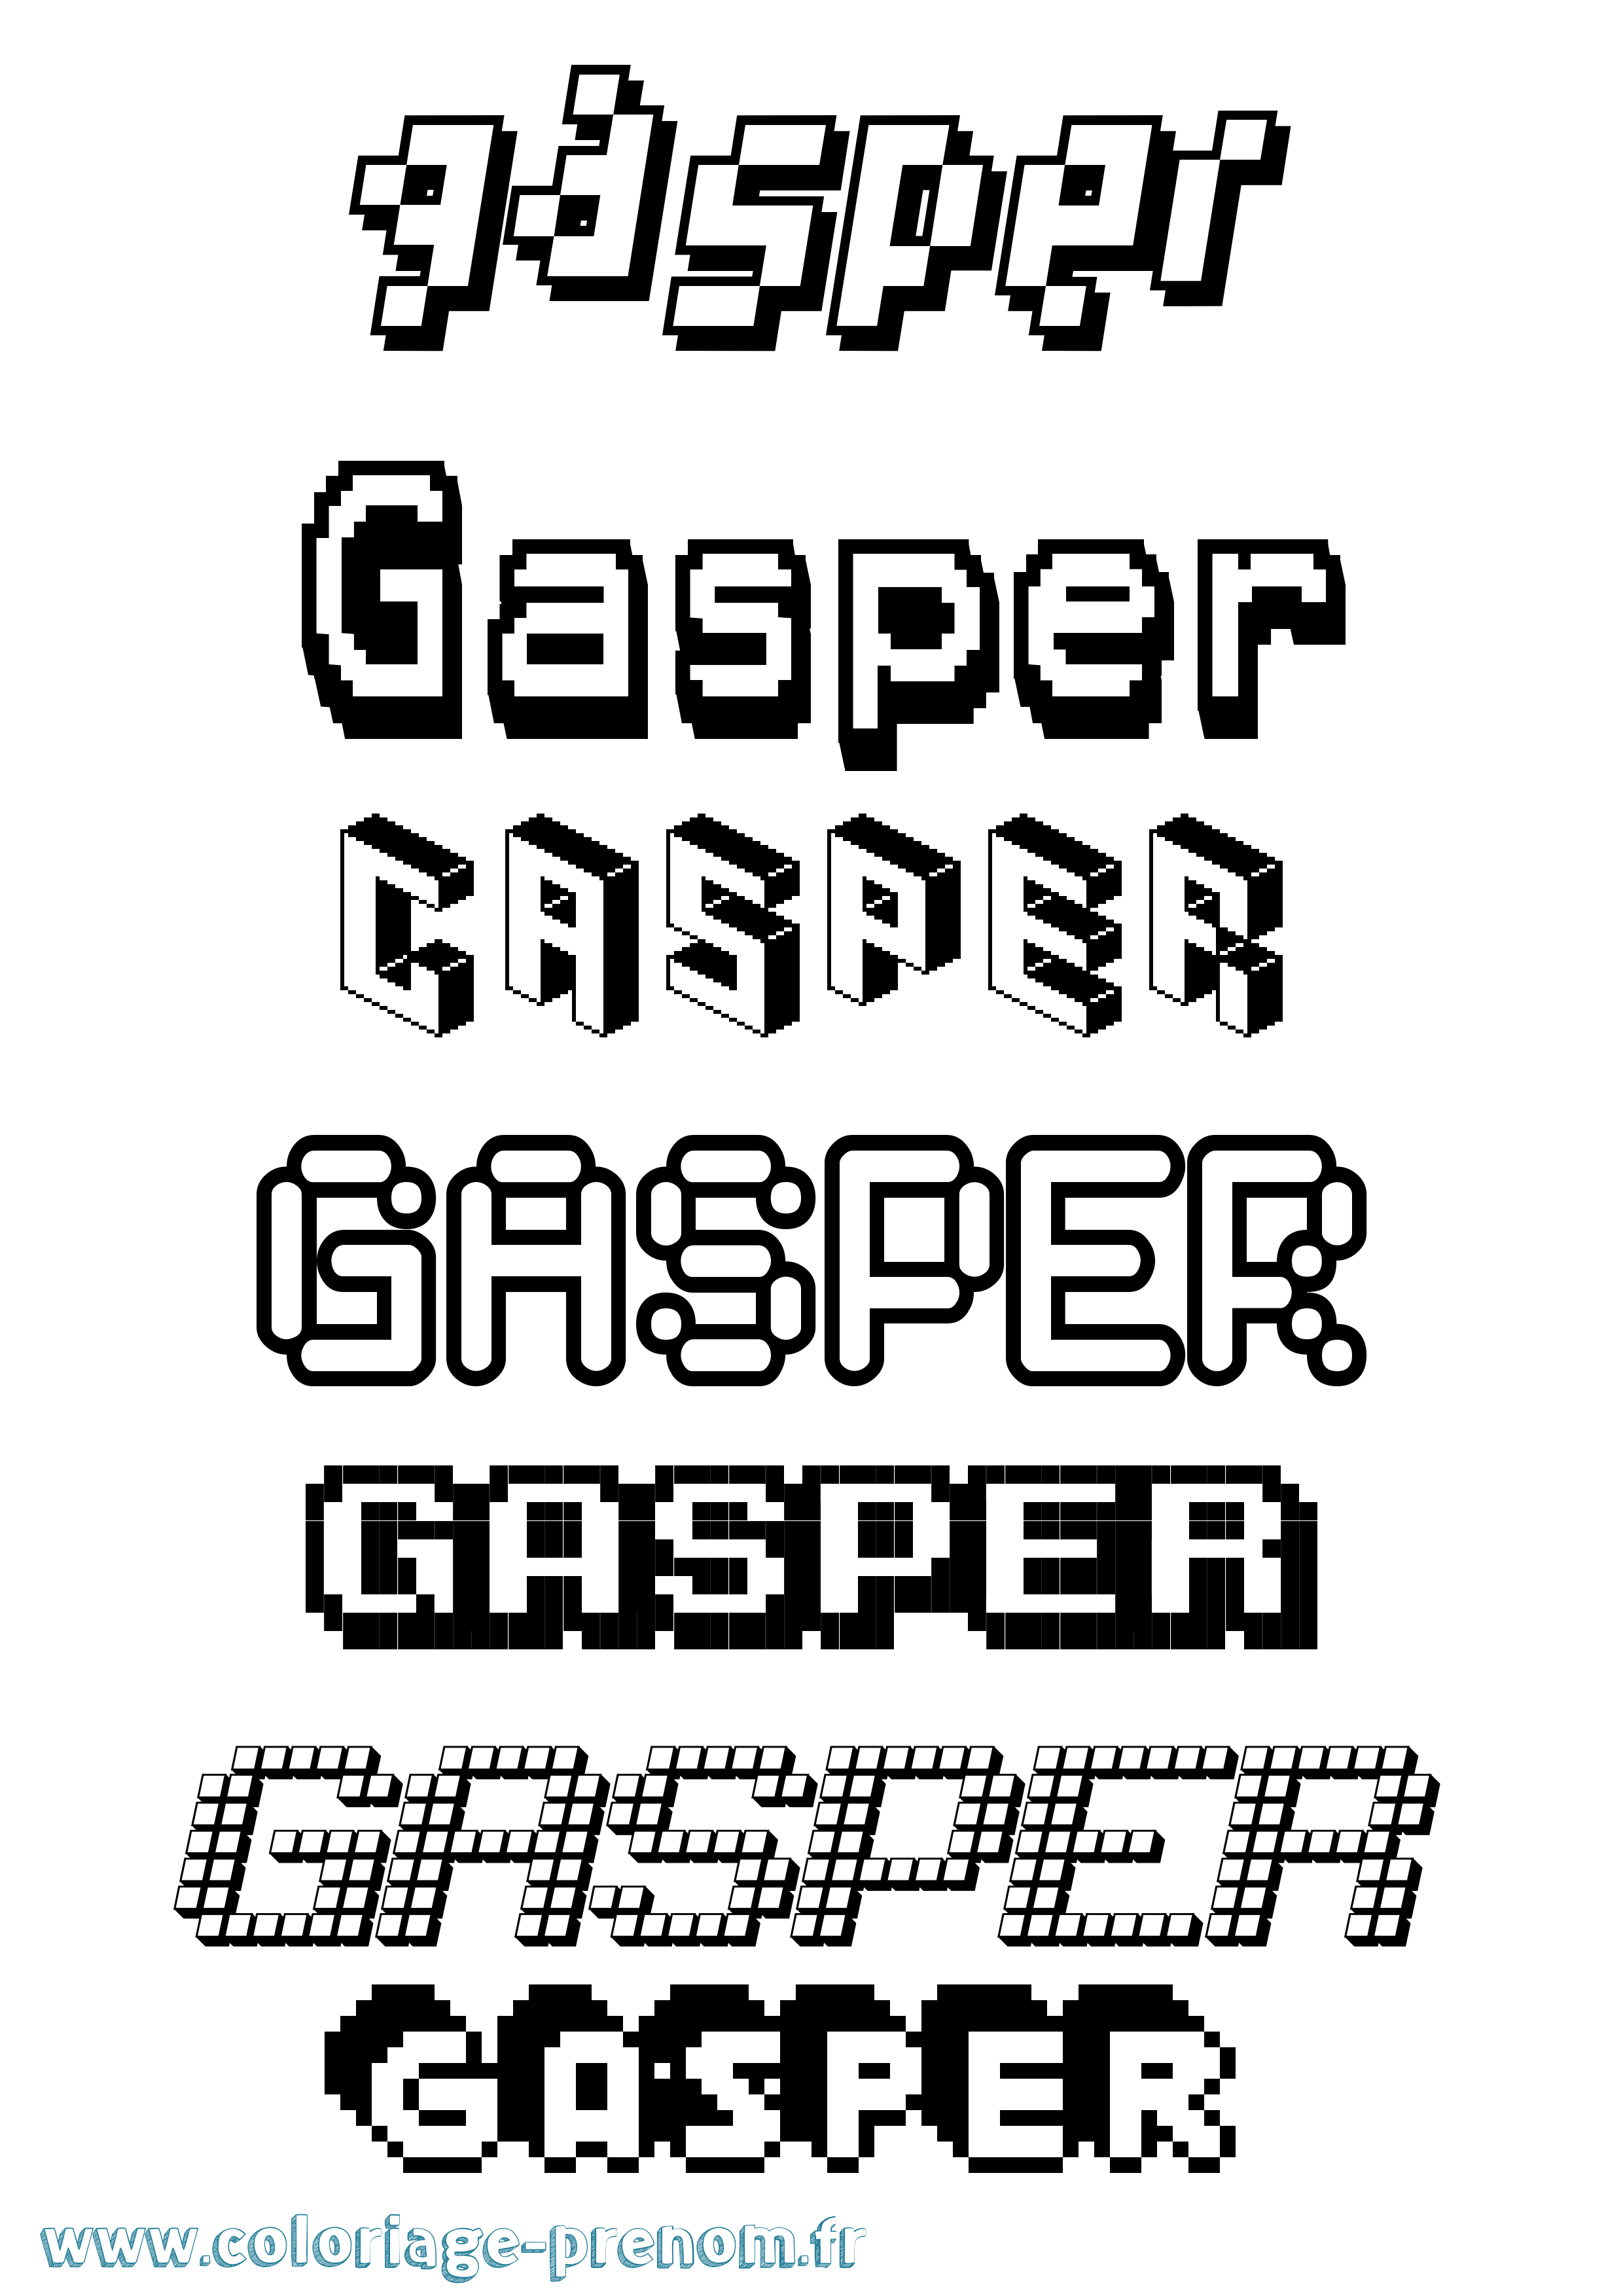 Coloriage prénom Gasper Pixel